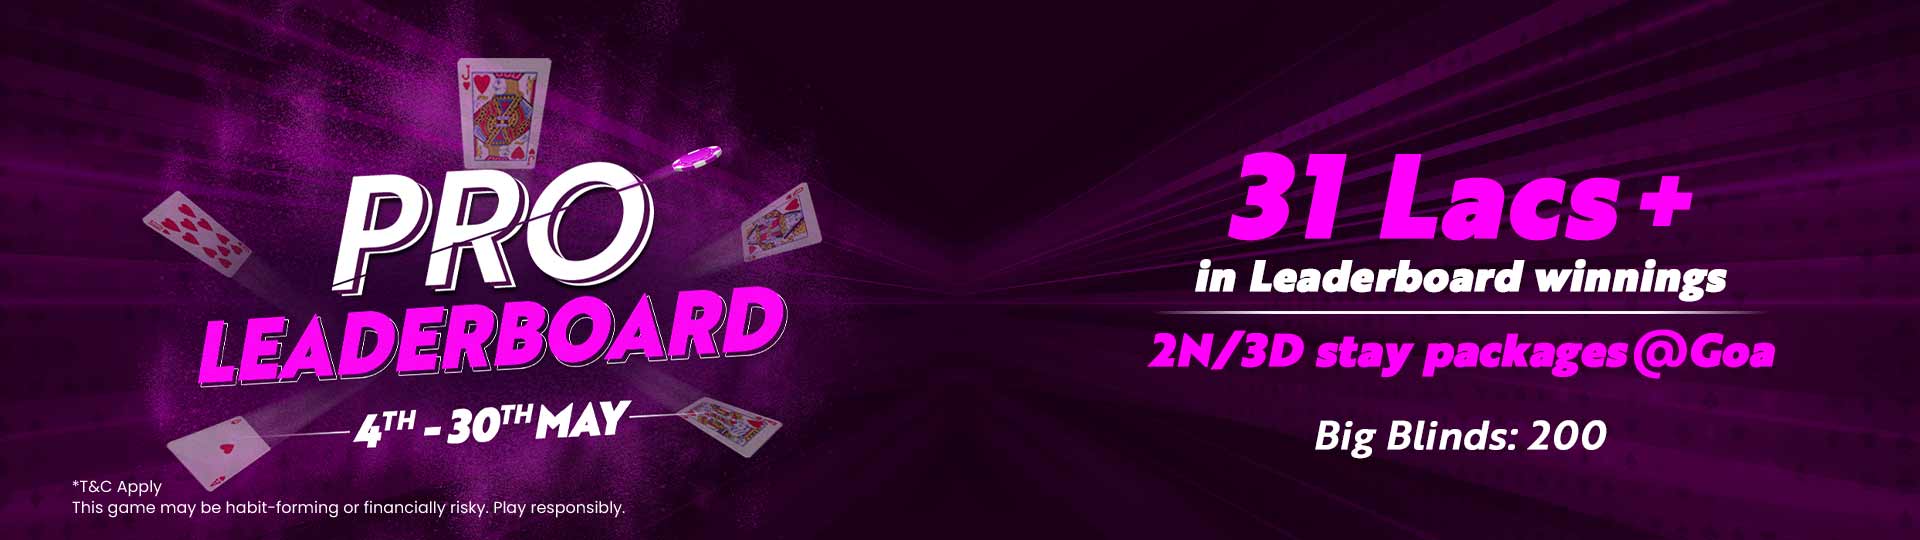 Adda52|Online|Poker|Pro Leaderboard|May